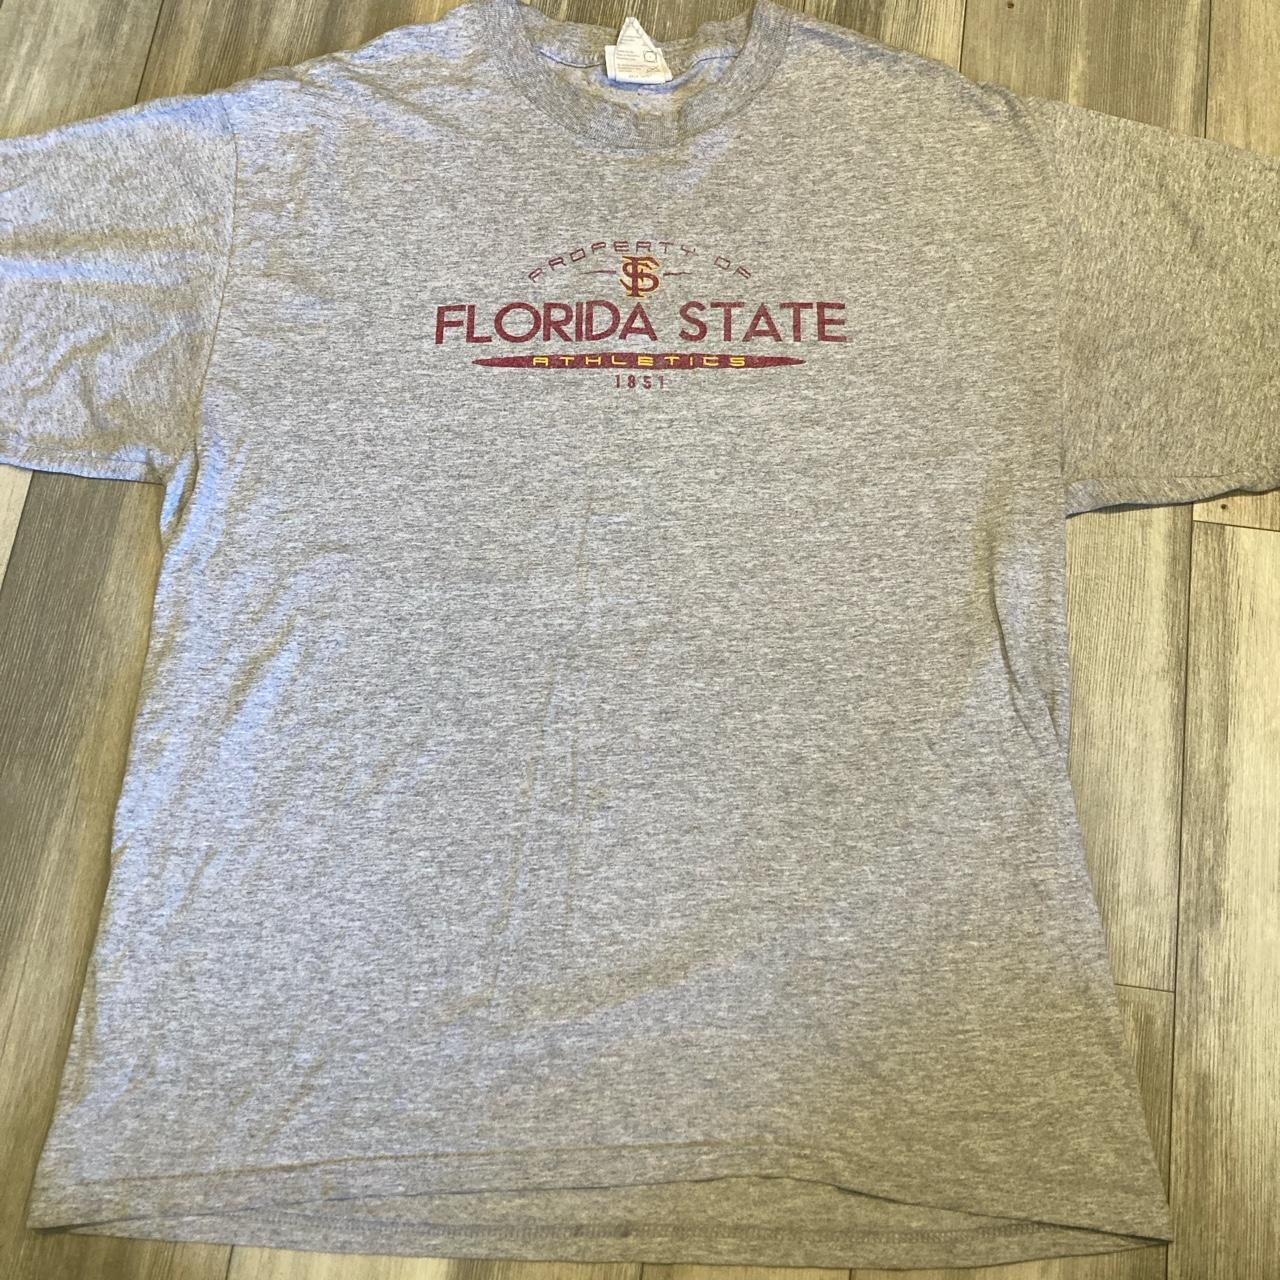 Florida state fsu shirt - Depop